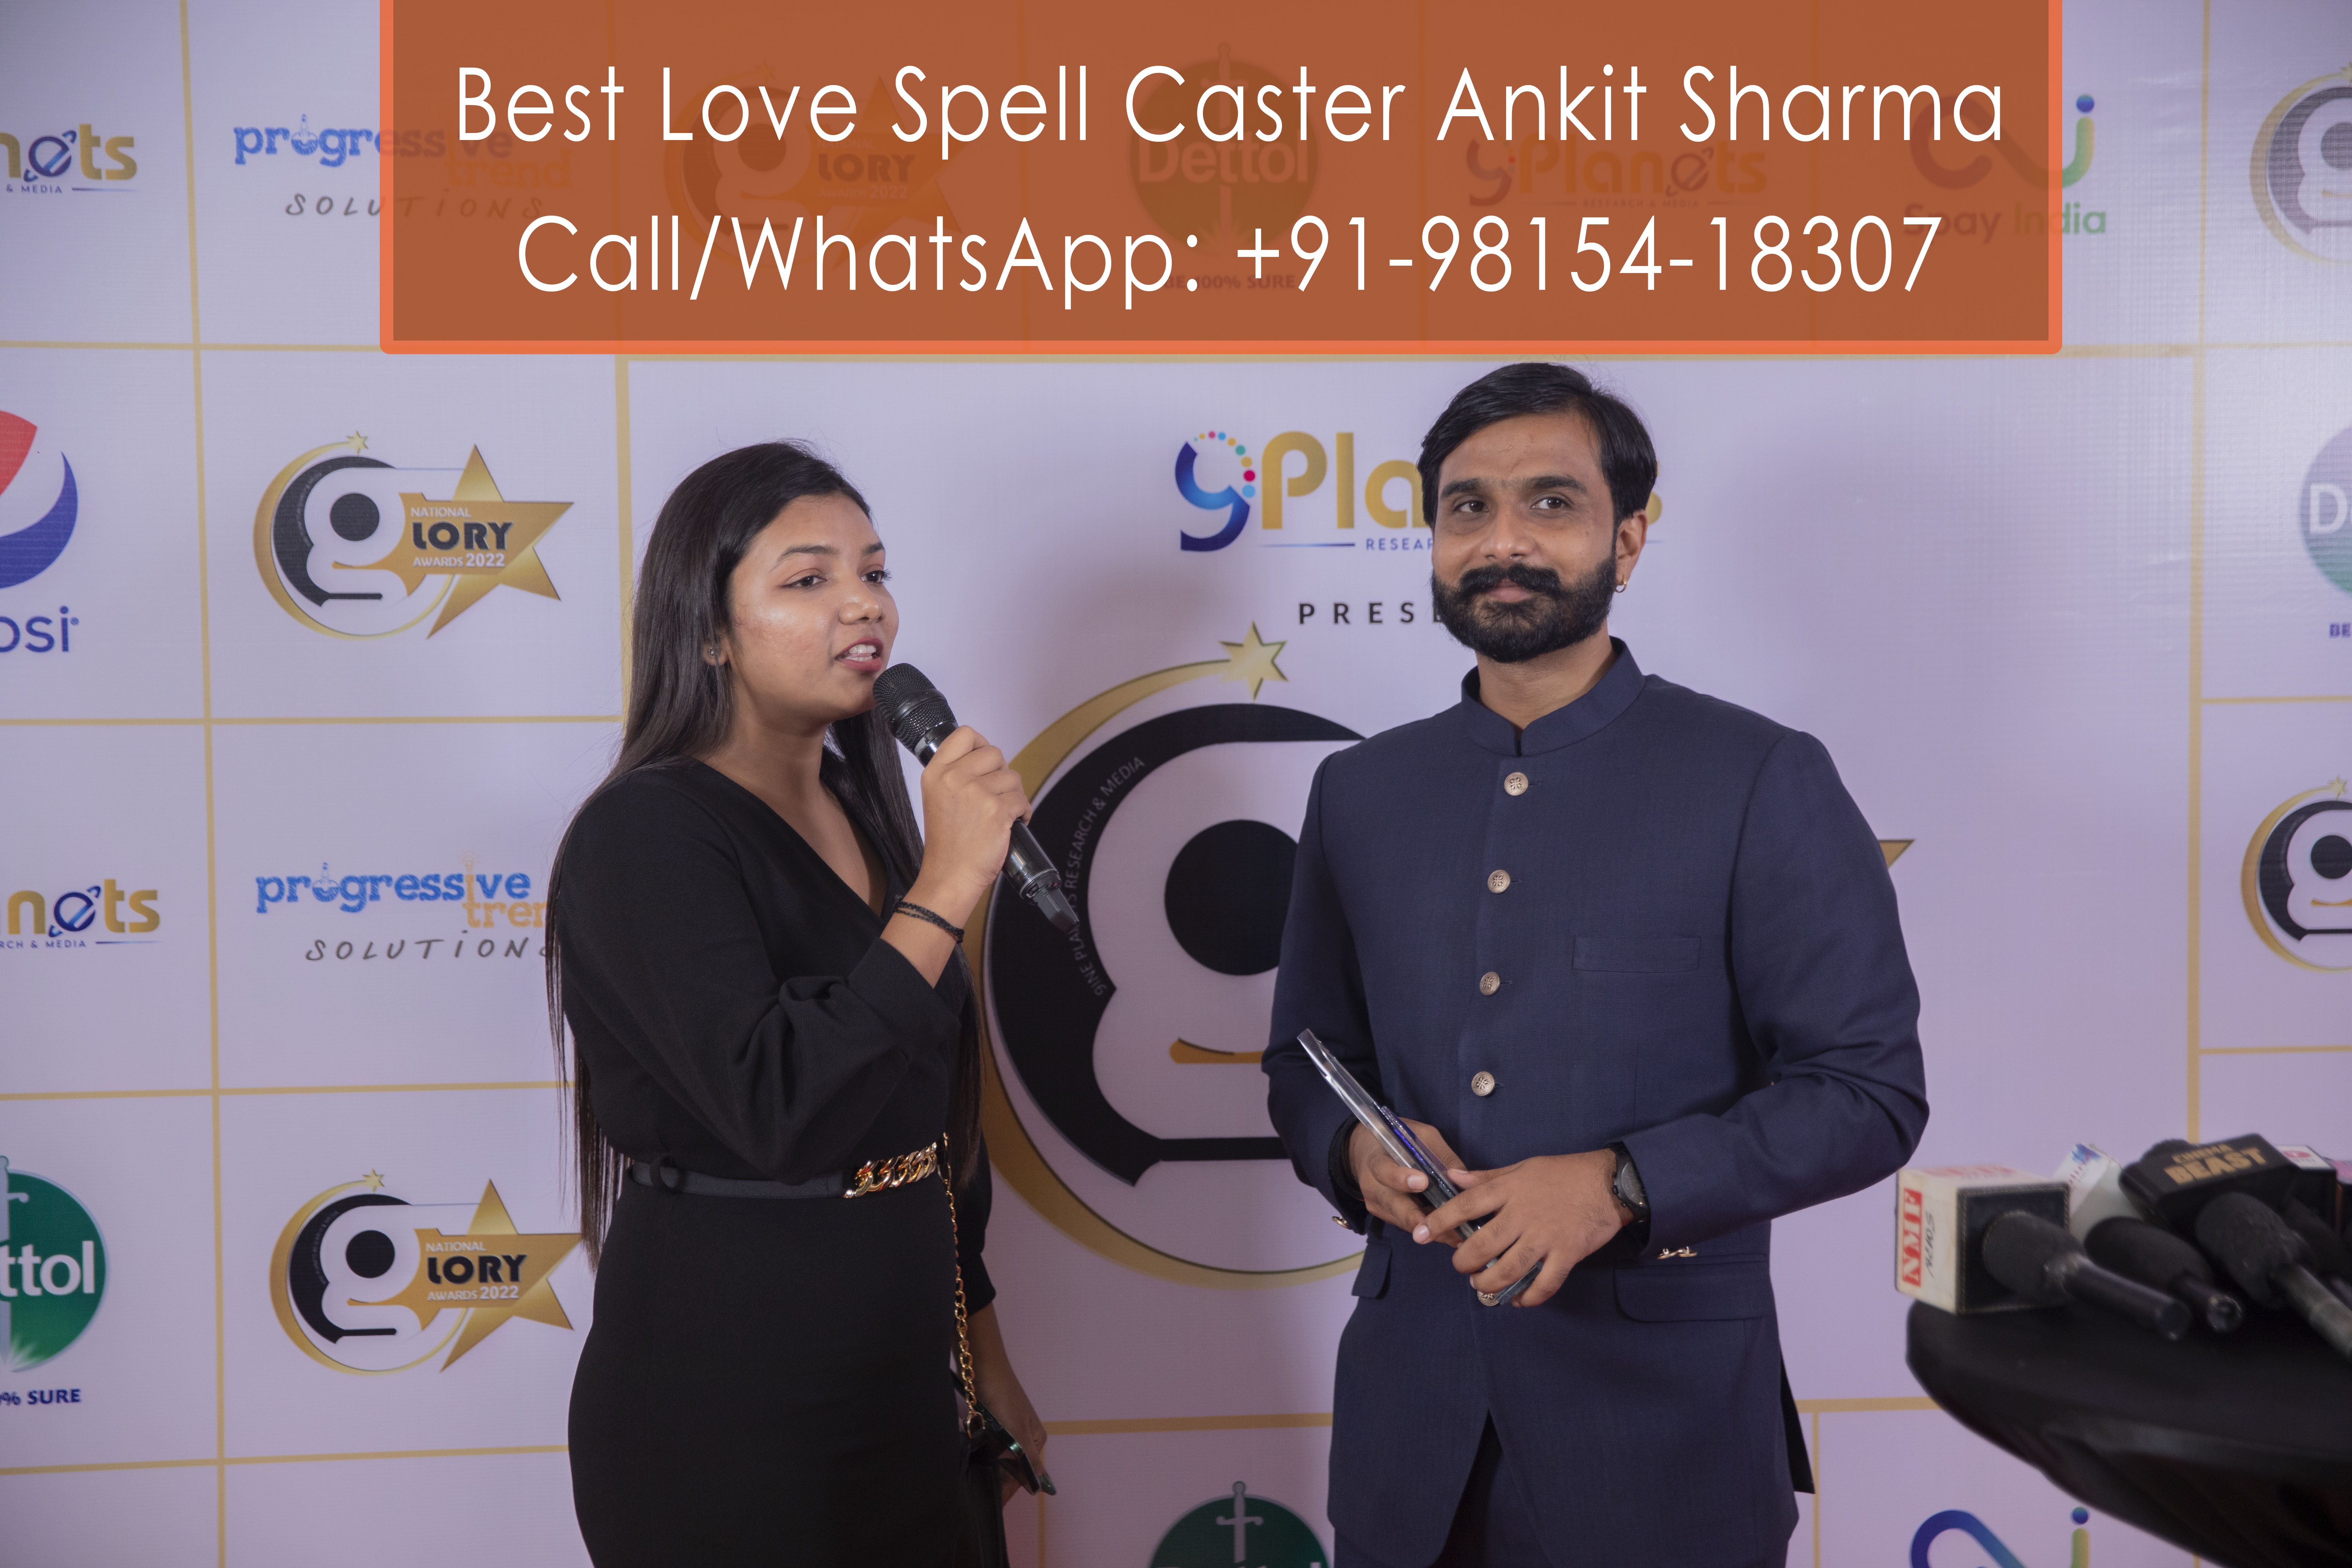 Best Love Spell Caster Ankit Sharma  | Call at +91-98154-18307